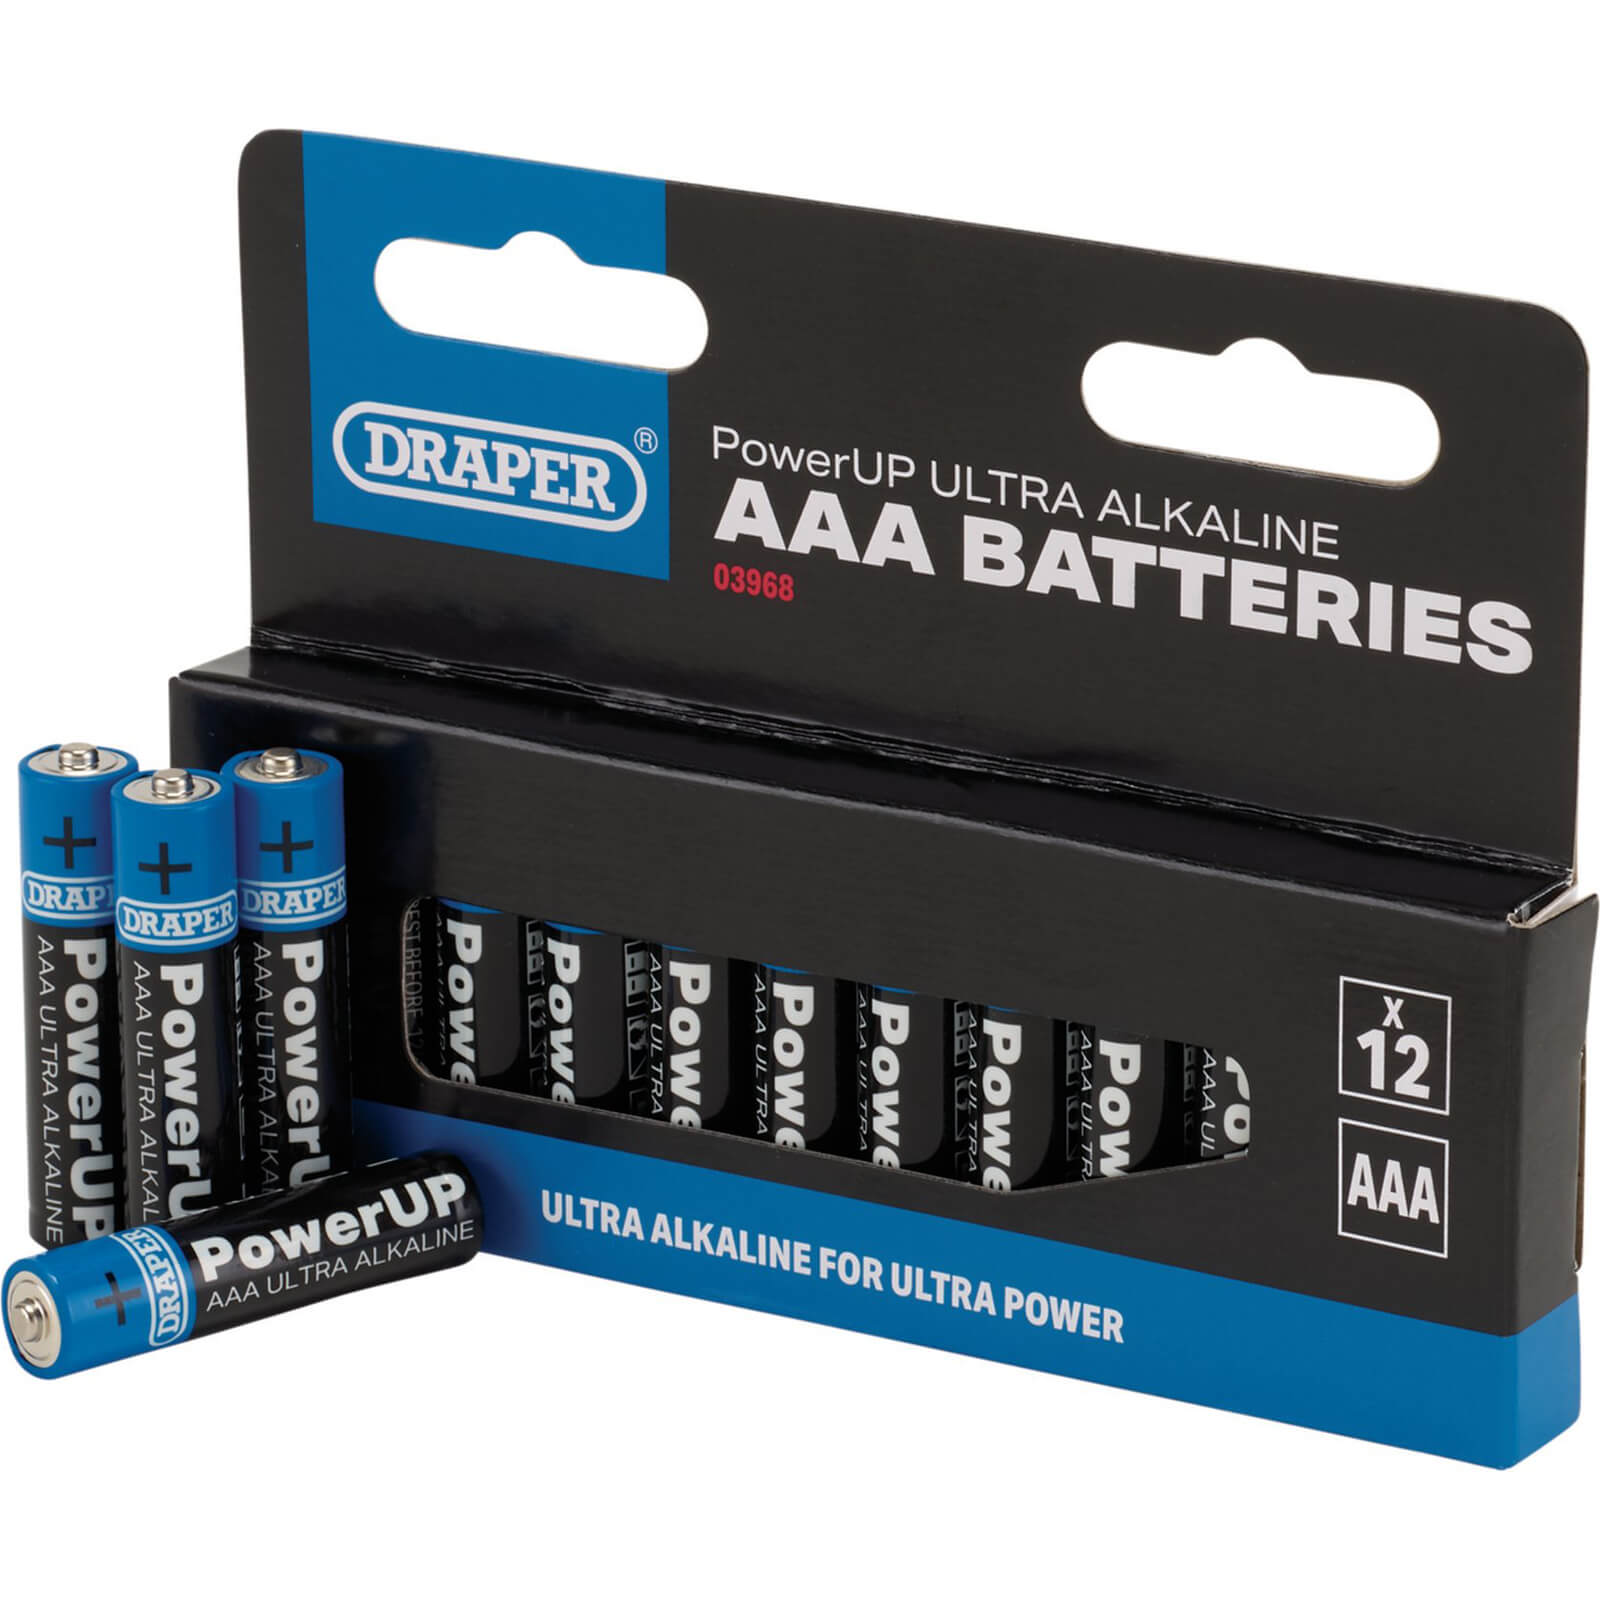 Draper Powerup Ultra Alkaline AAA Batteries Pack of 12